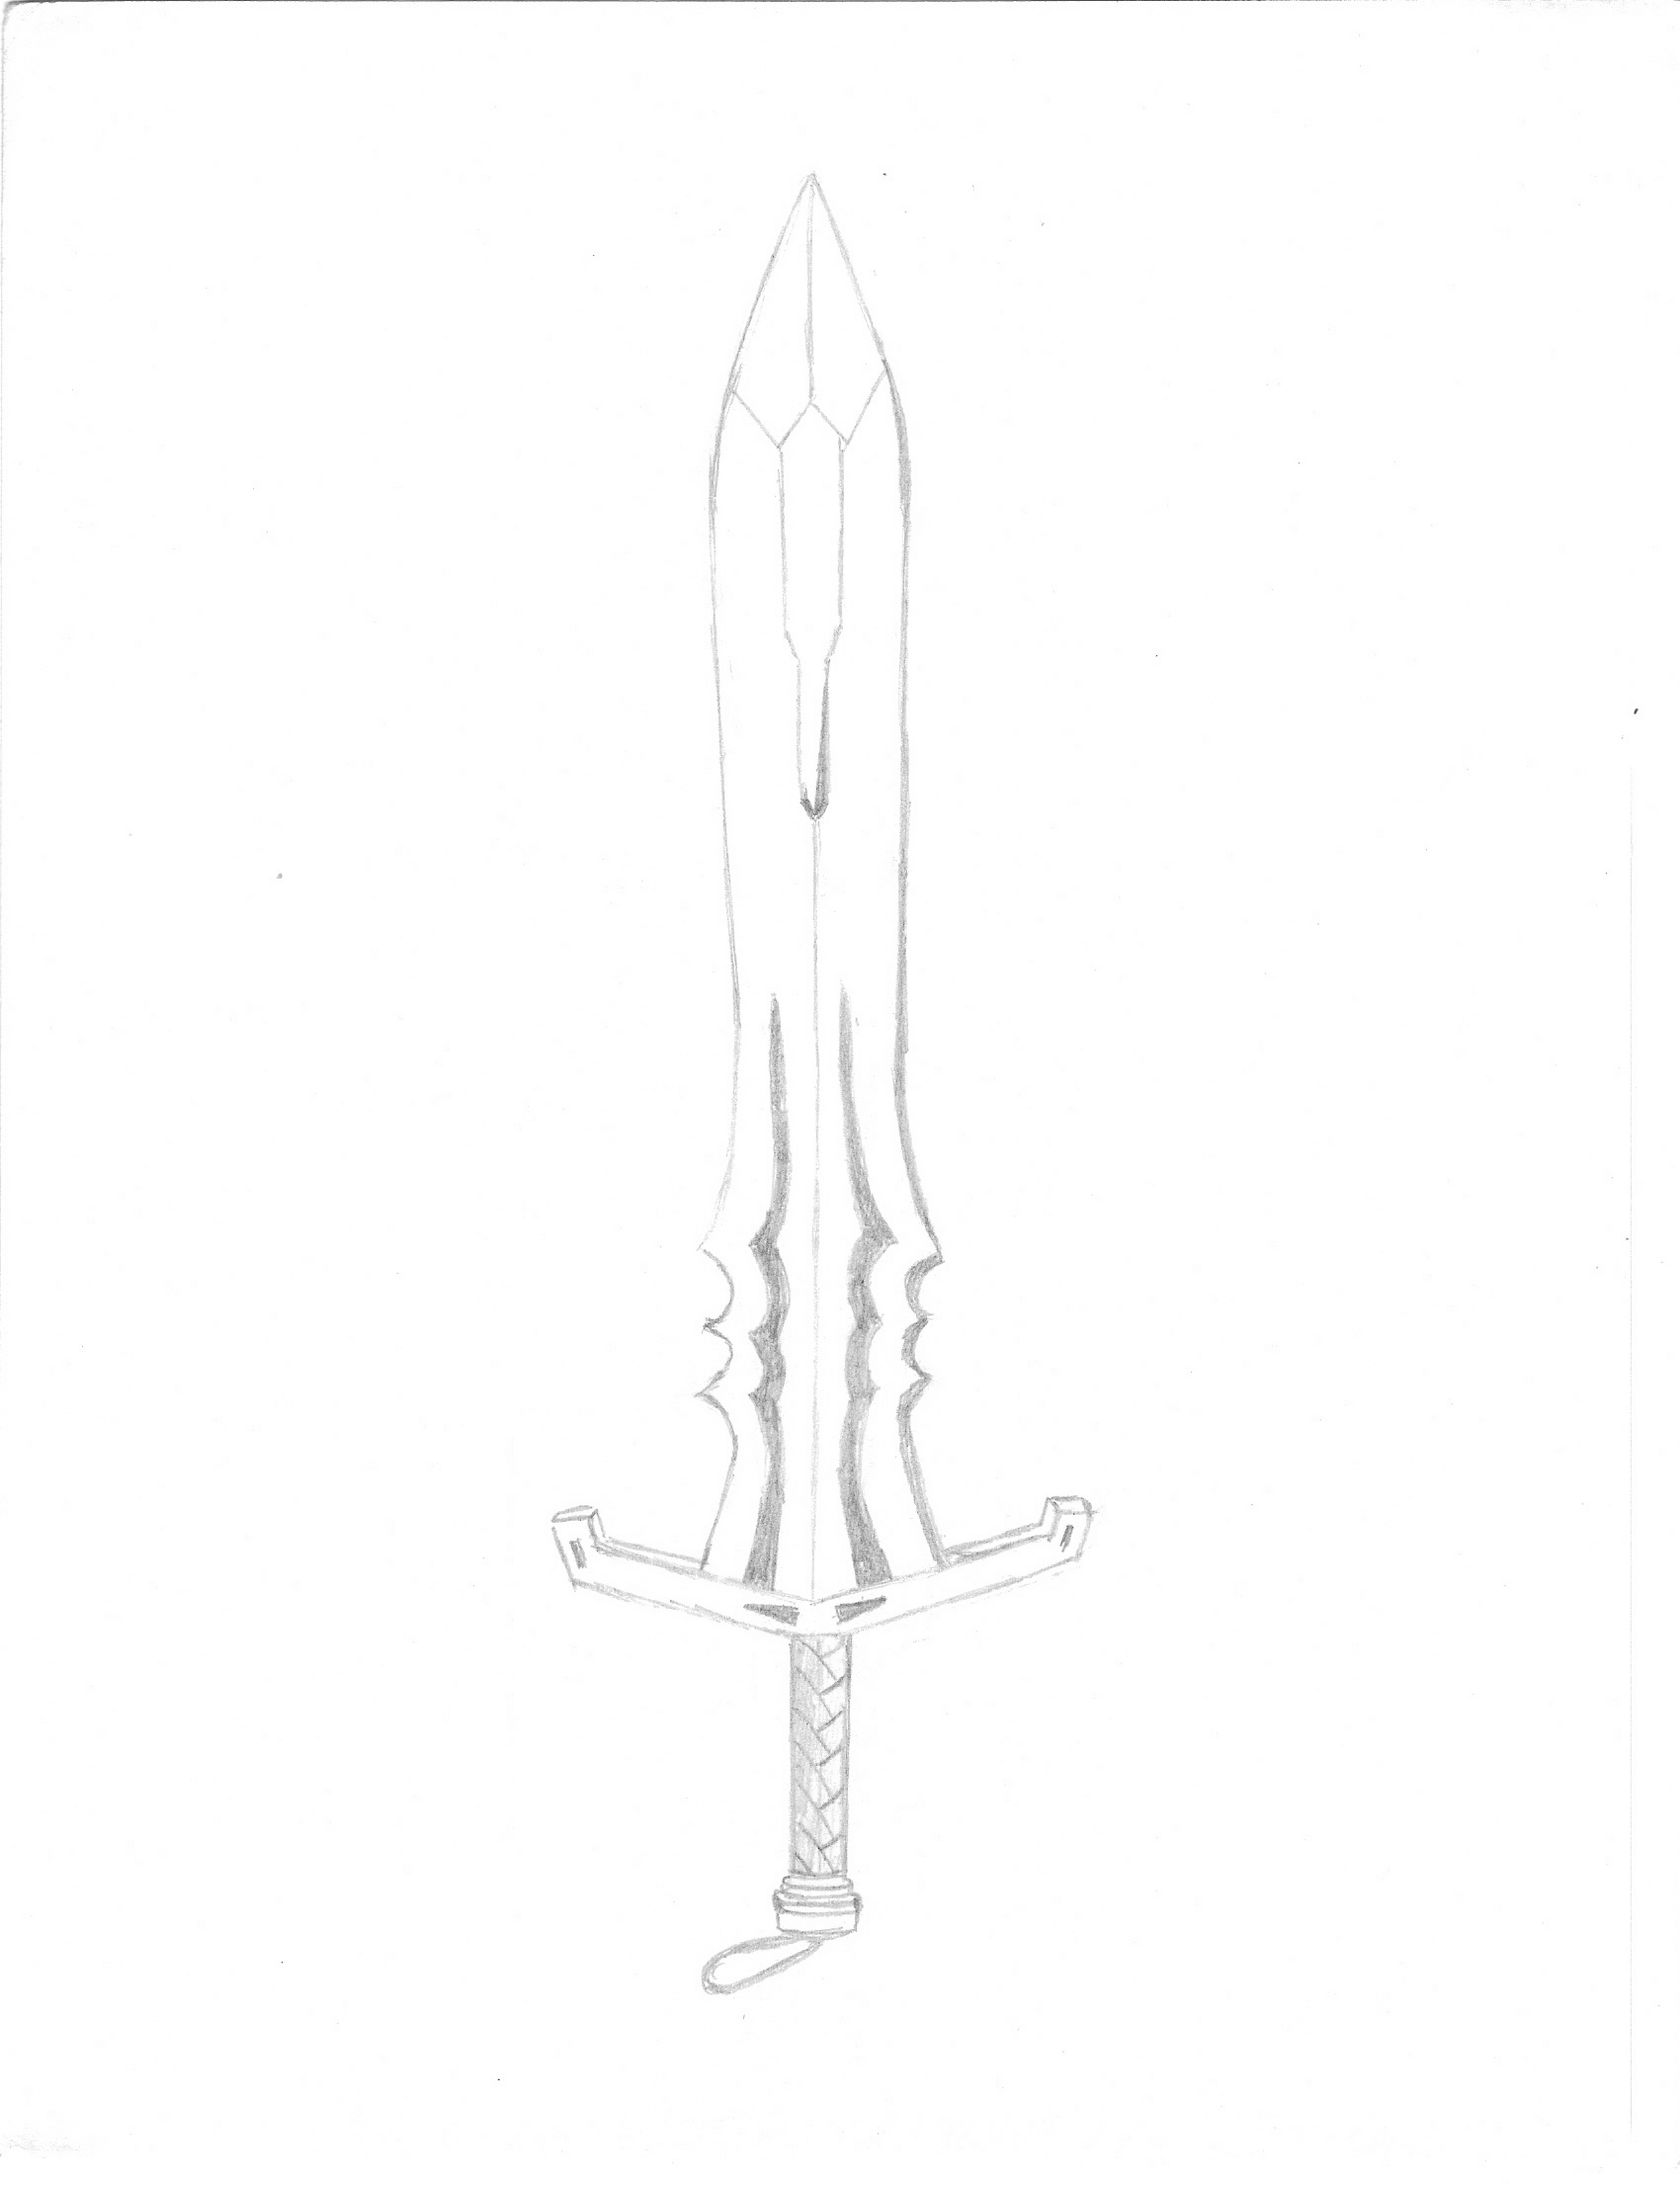 Rheas Sword by Icienvalle